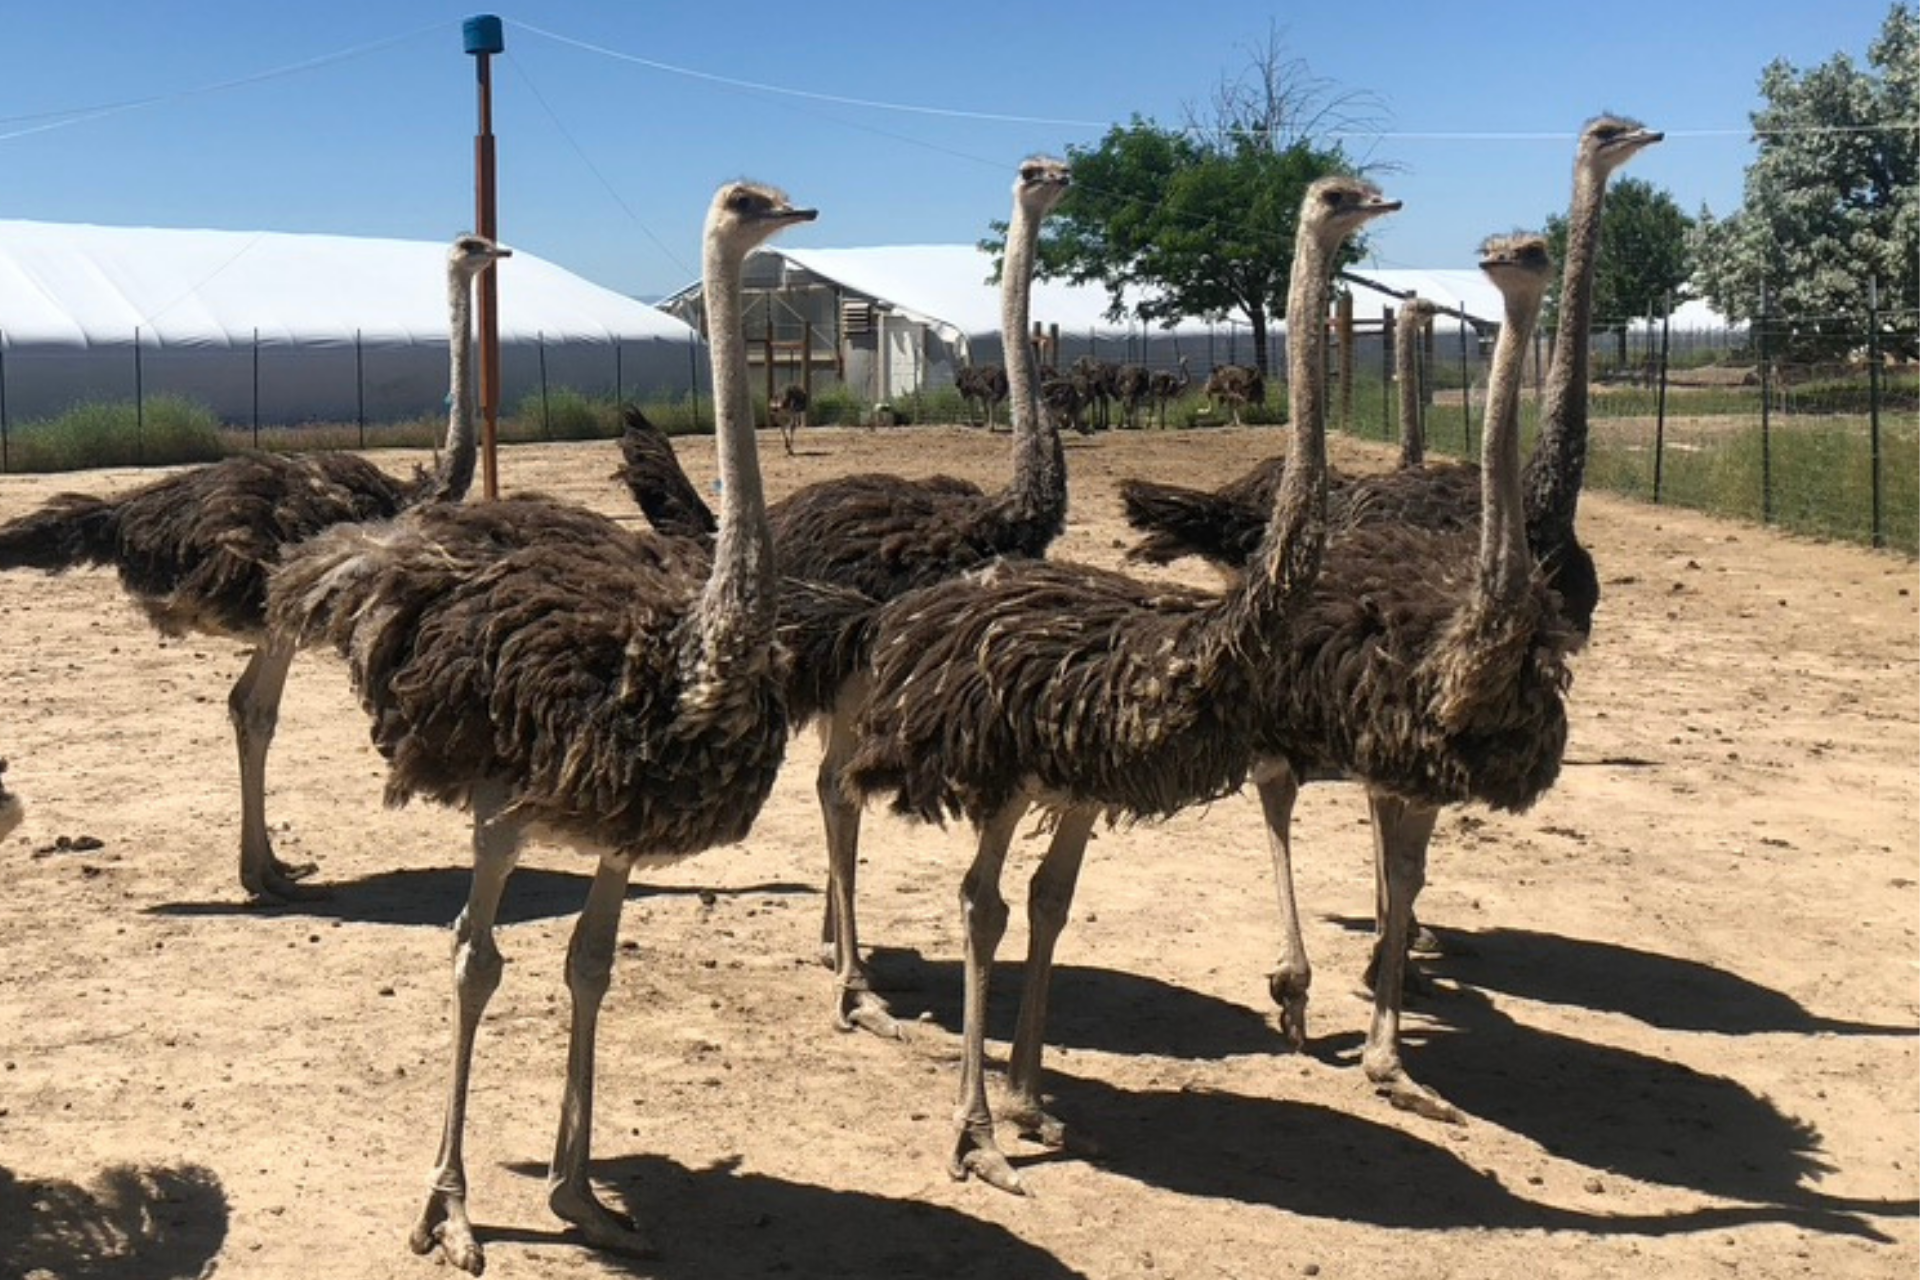 What Do Ostriches Eat? | Ostrich Diet & Nutrition - American Ostrich Farms